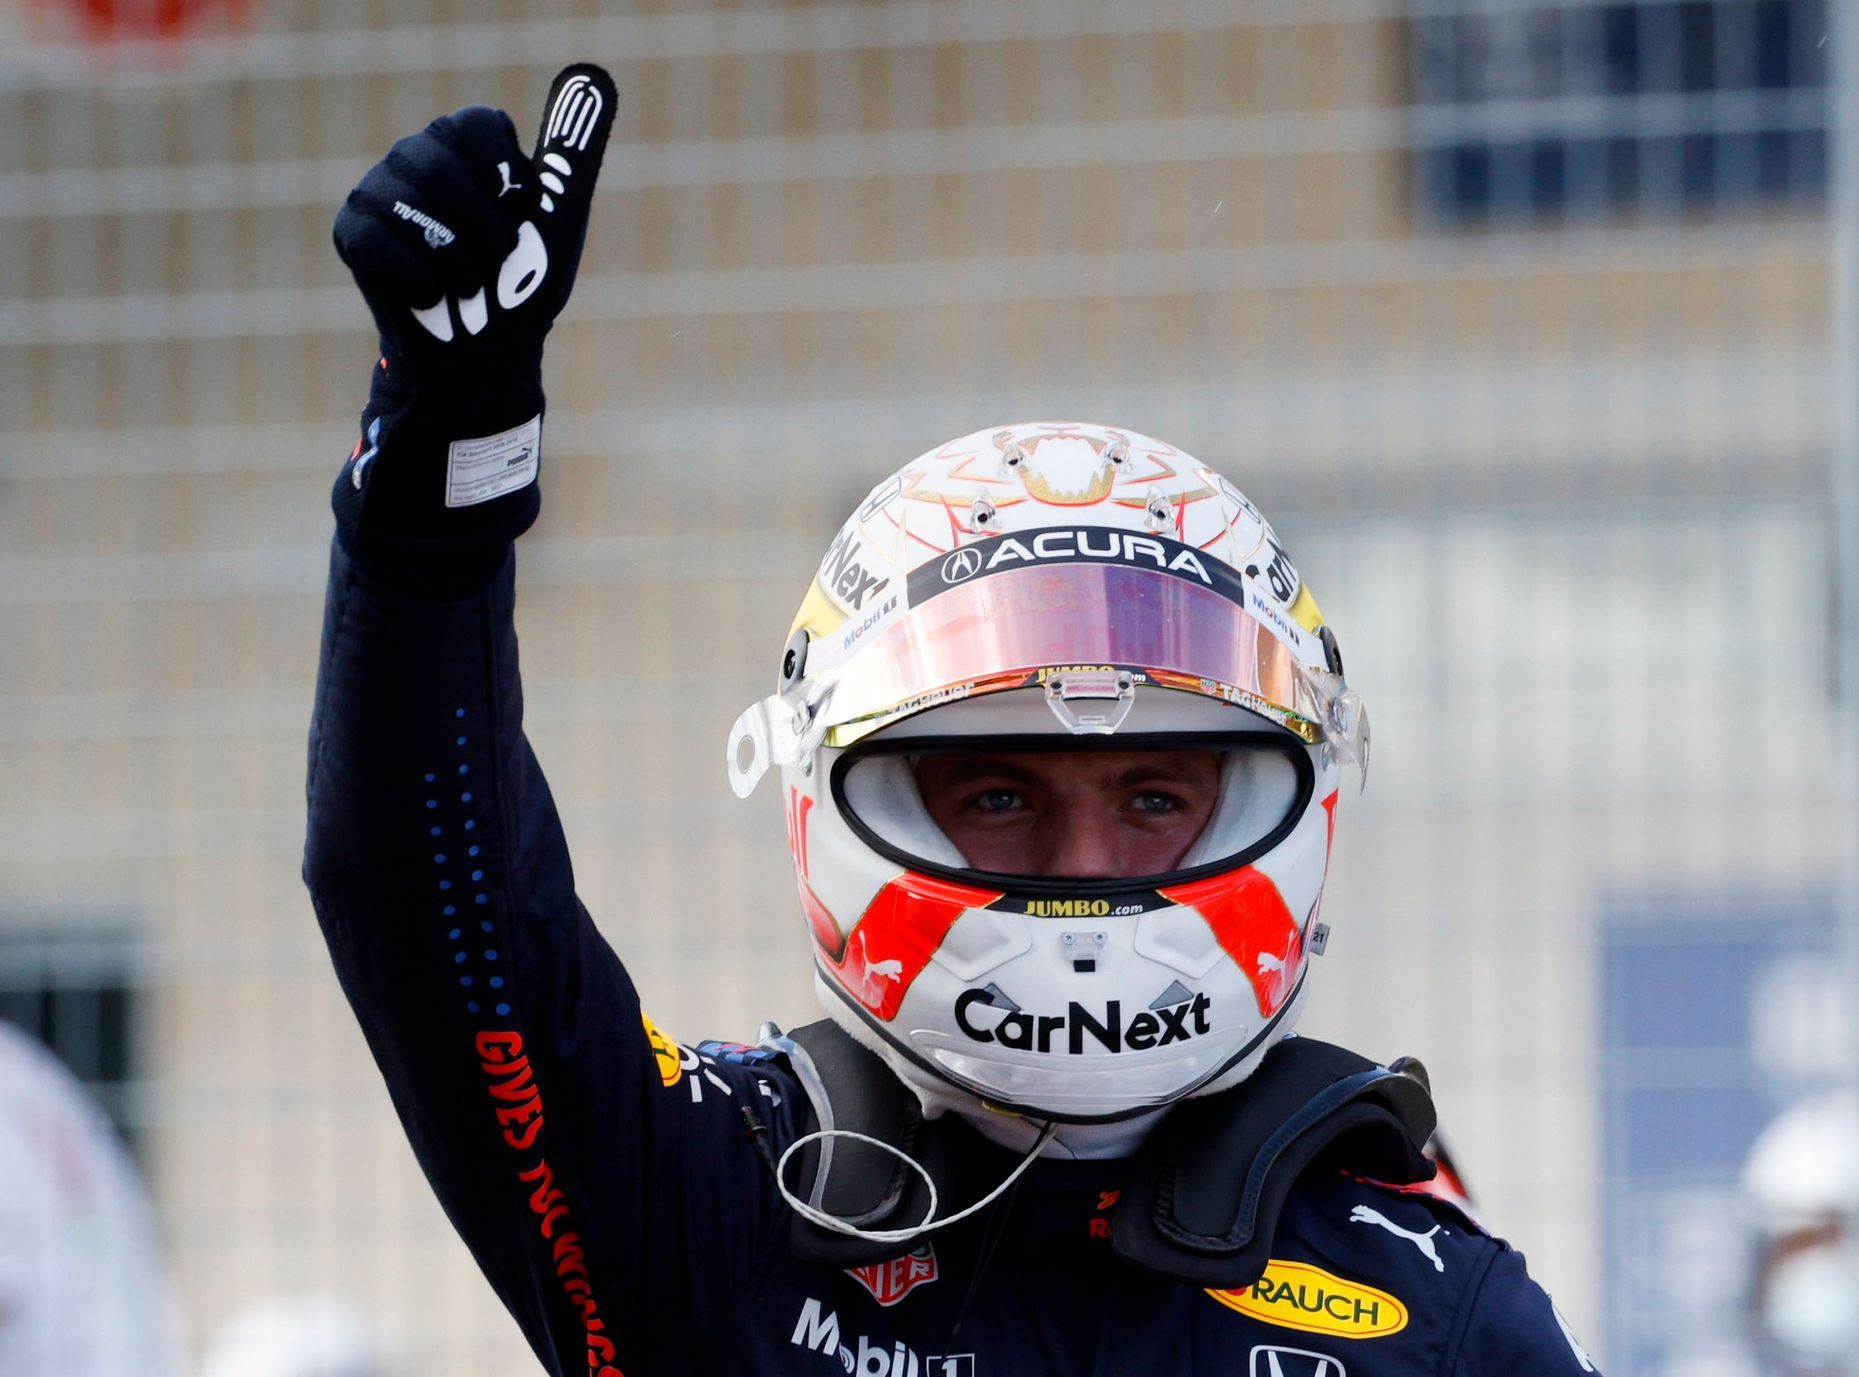 Verstappen won the United States Grand Prix ahead of Hamilton and Pérez